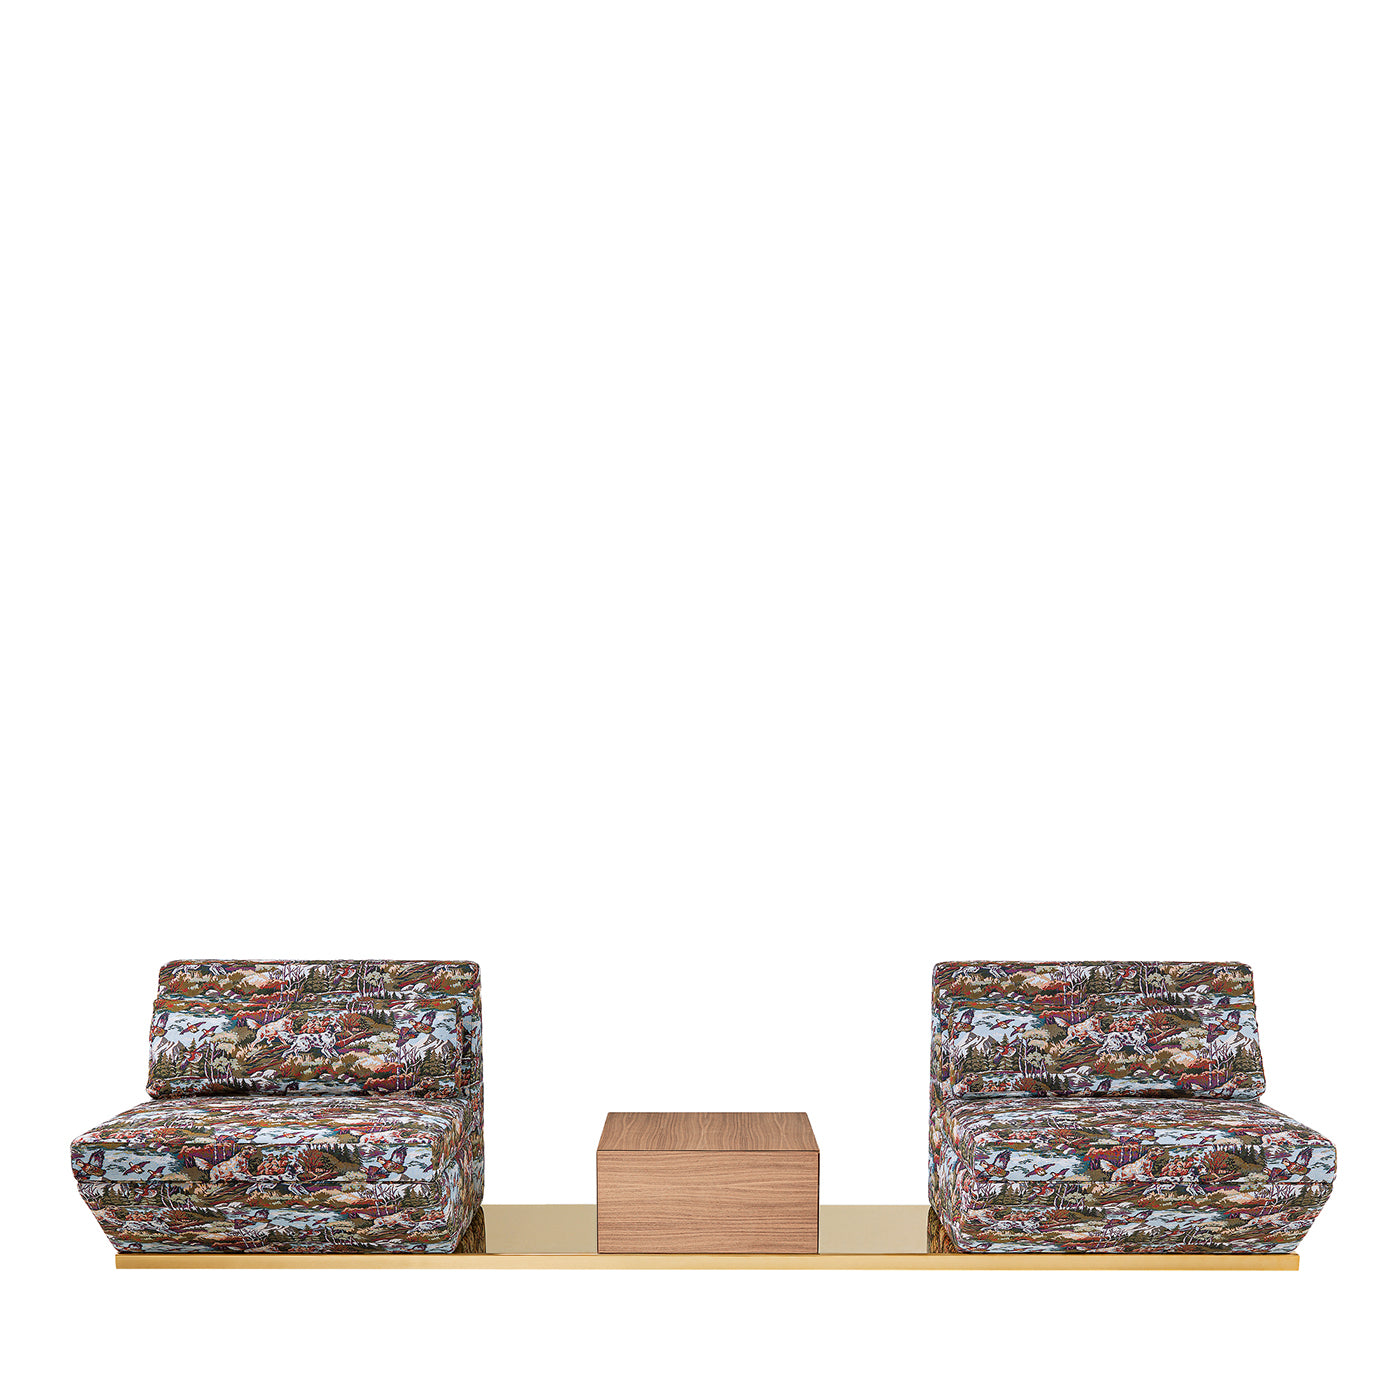 DIALOGO Modular Sofa by StorageMilano - Main view